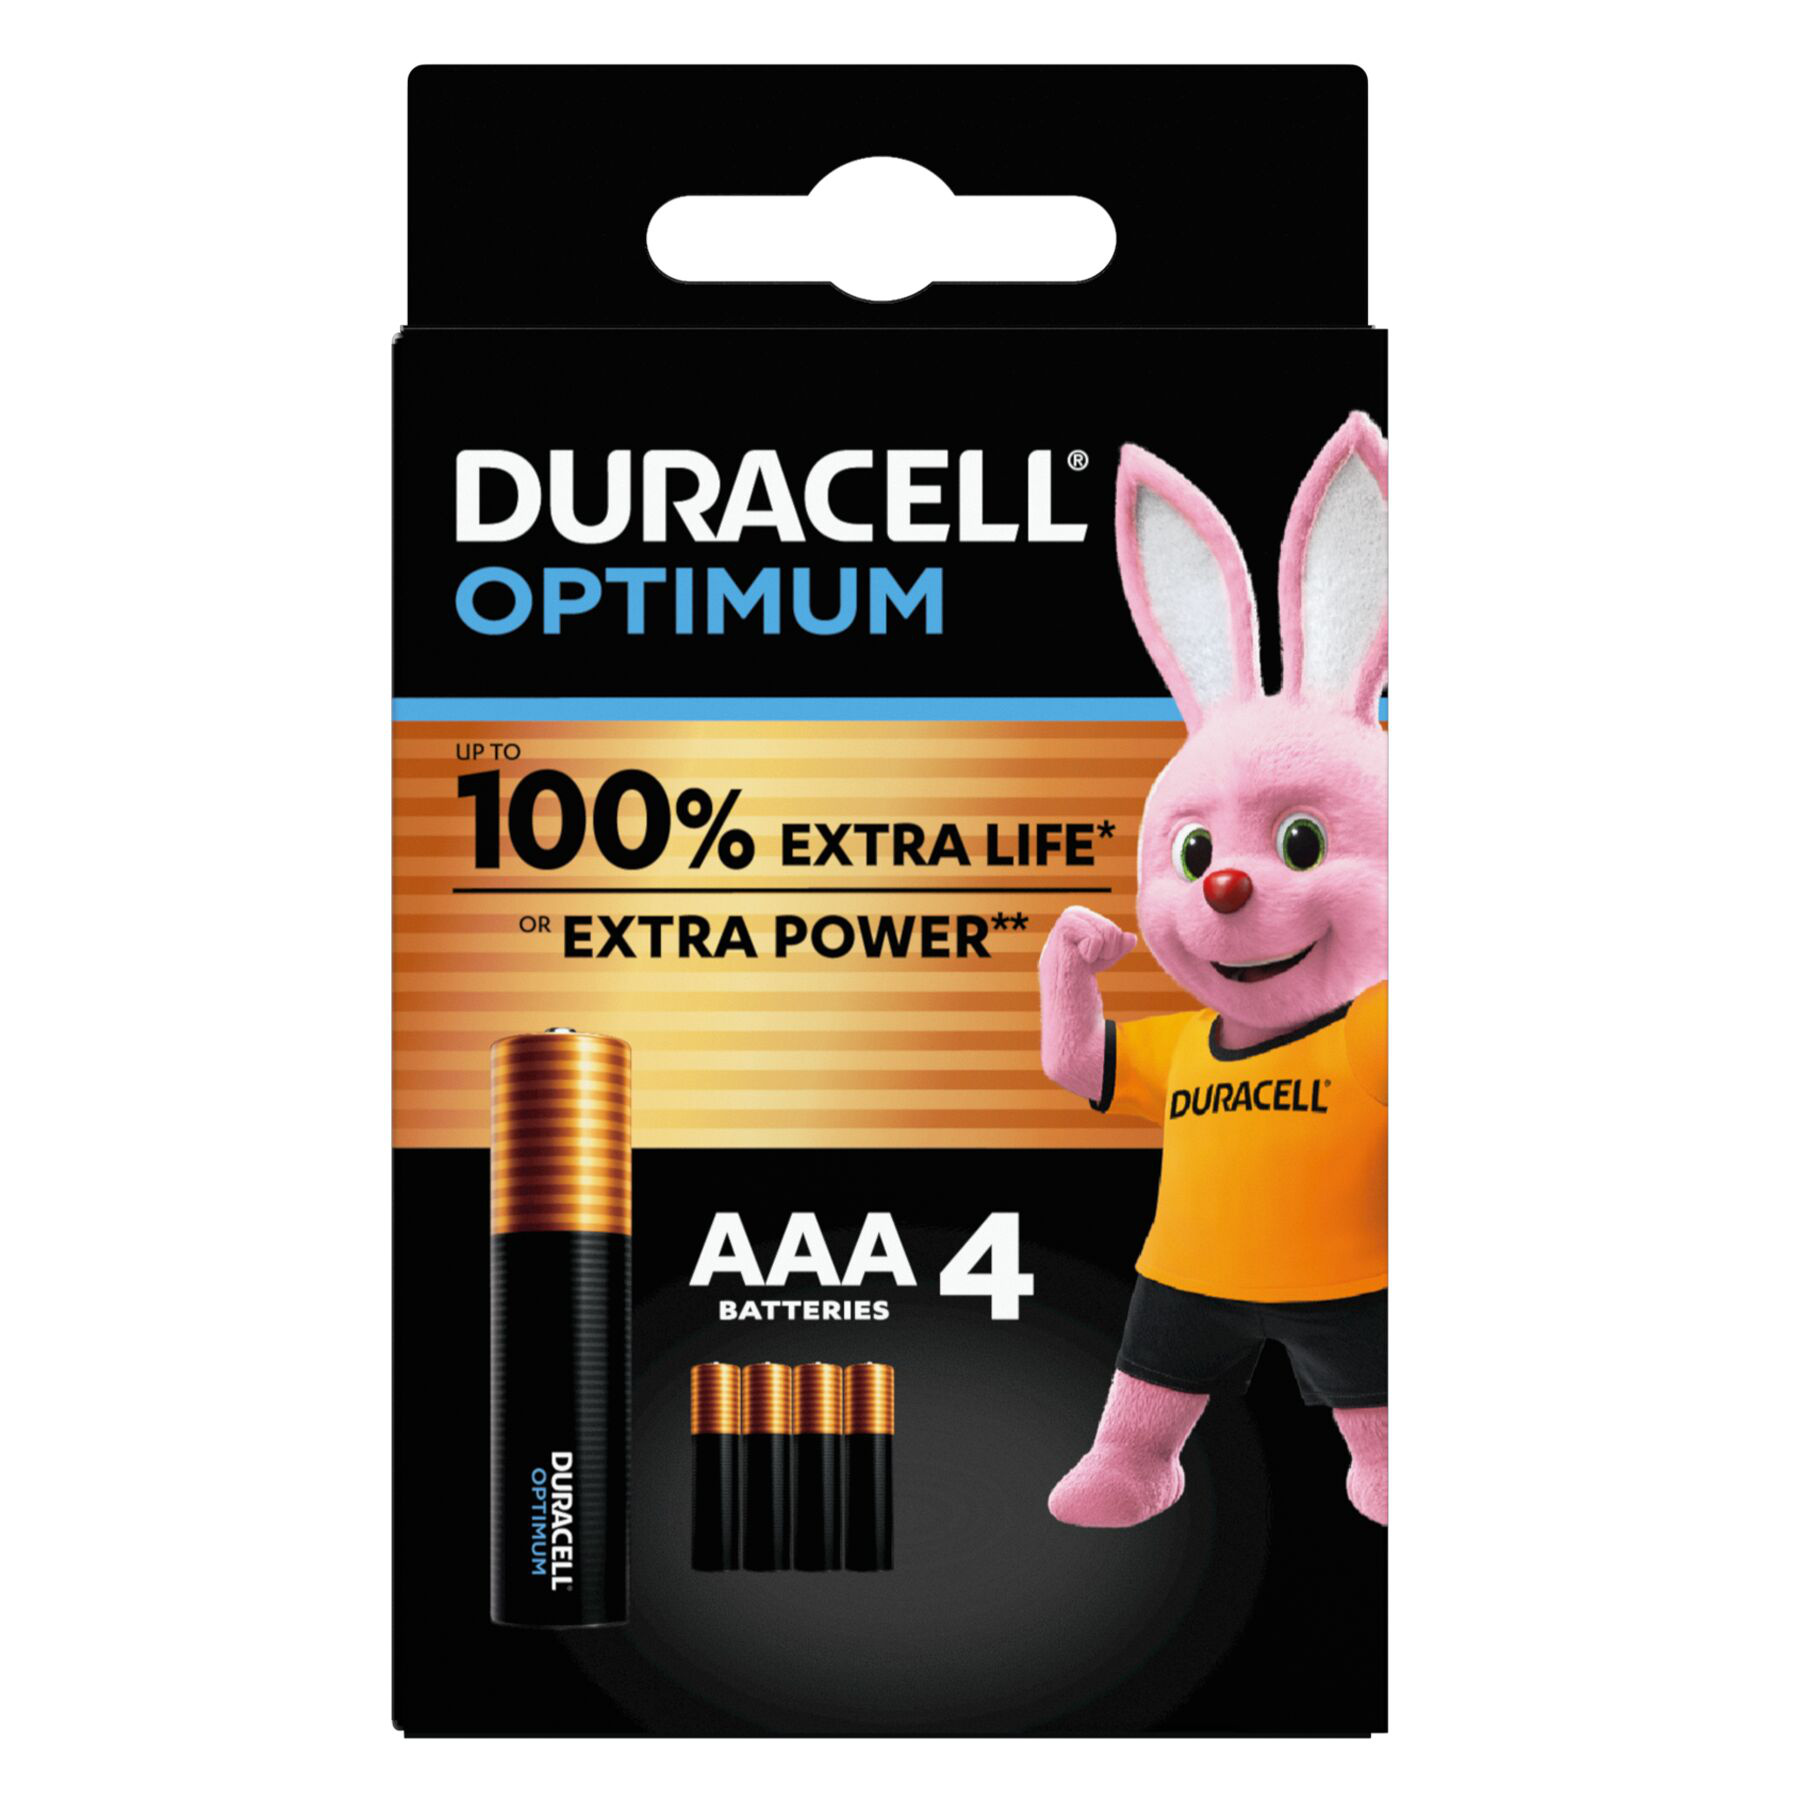 DURACELL Optimium - 4 piles alcalines - AAA LR03 Pas Cher